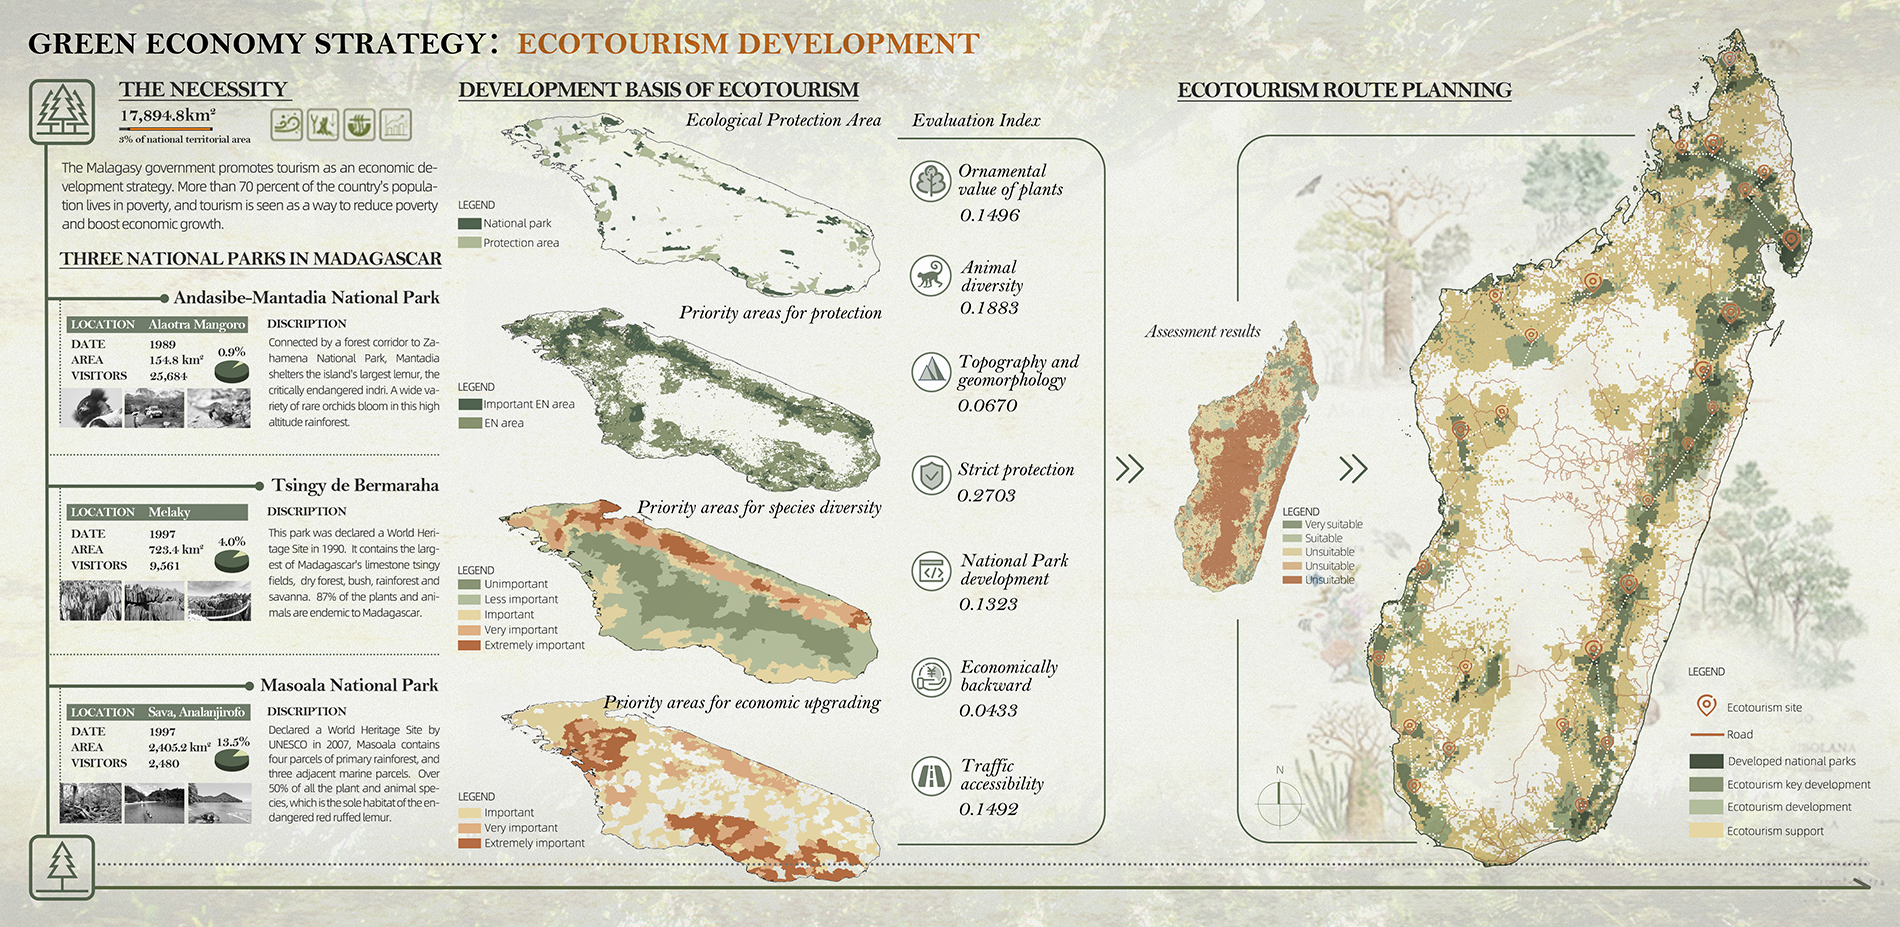 Green Economy Strategy: Ecotourism Development